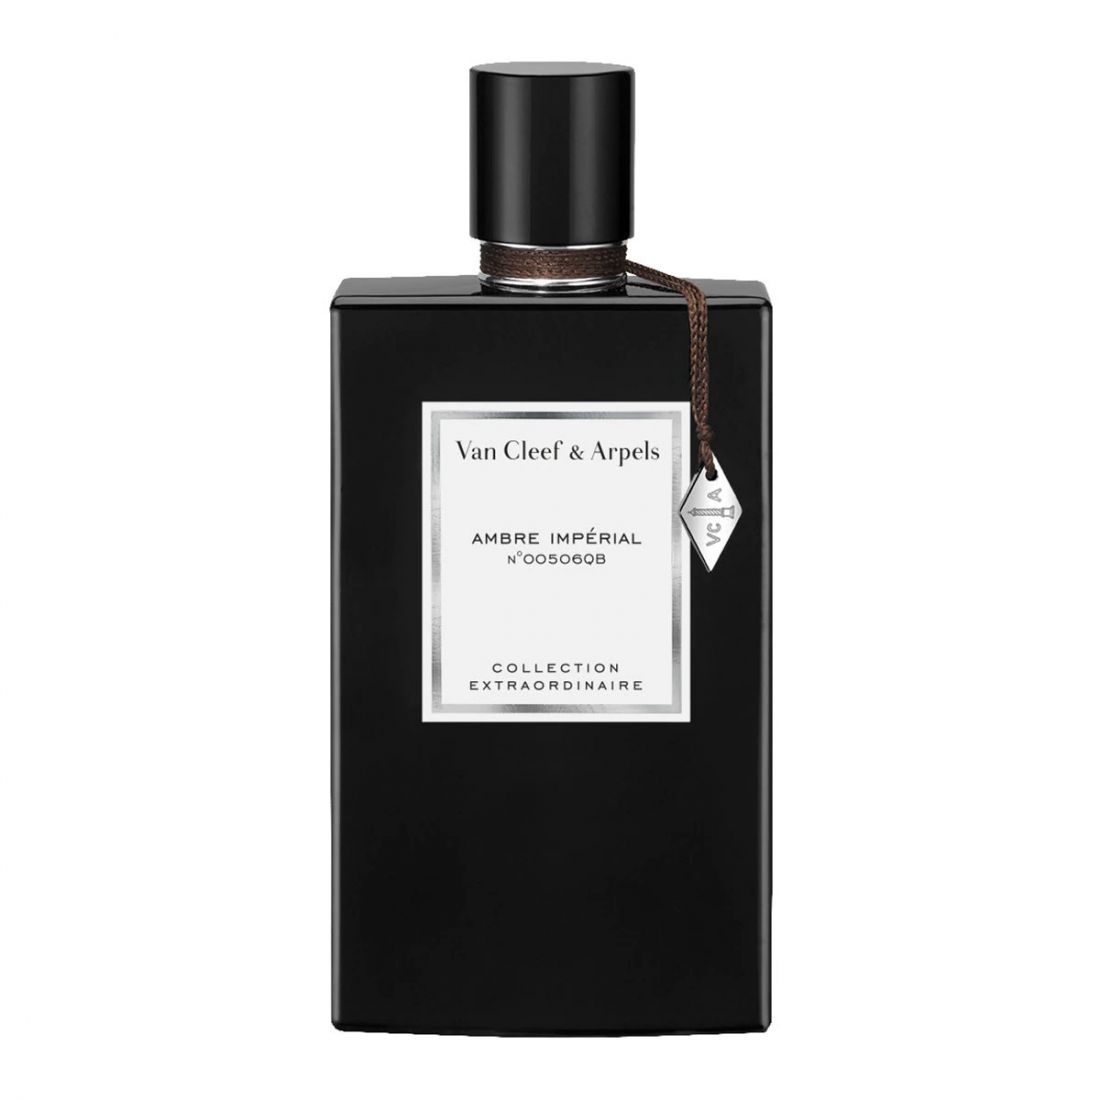 Van Cleef & Arpels - Eau de parfum 'Ambre Impérial' - 75 ml